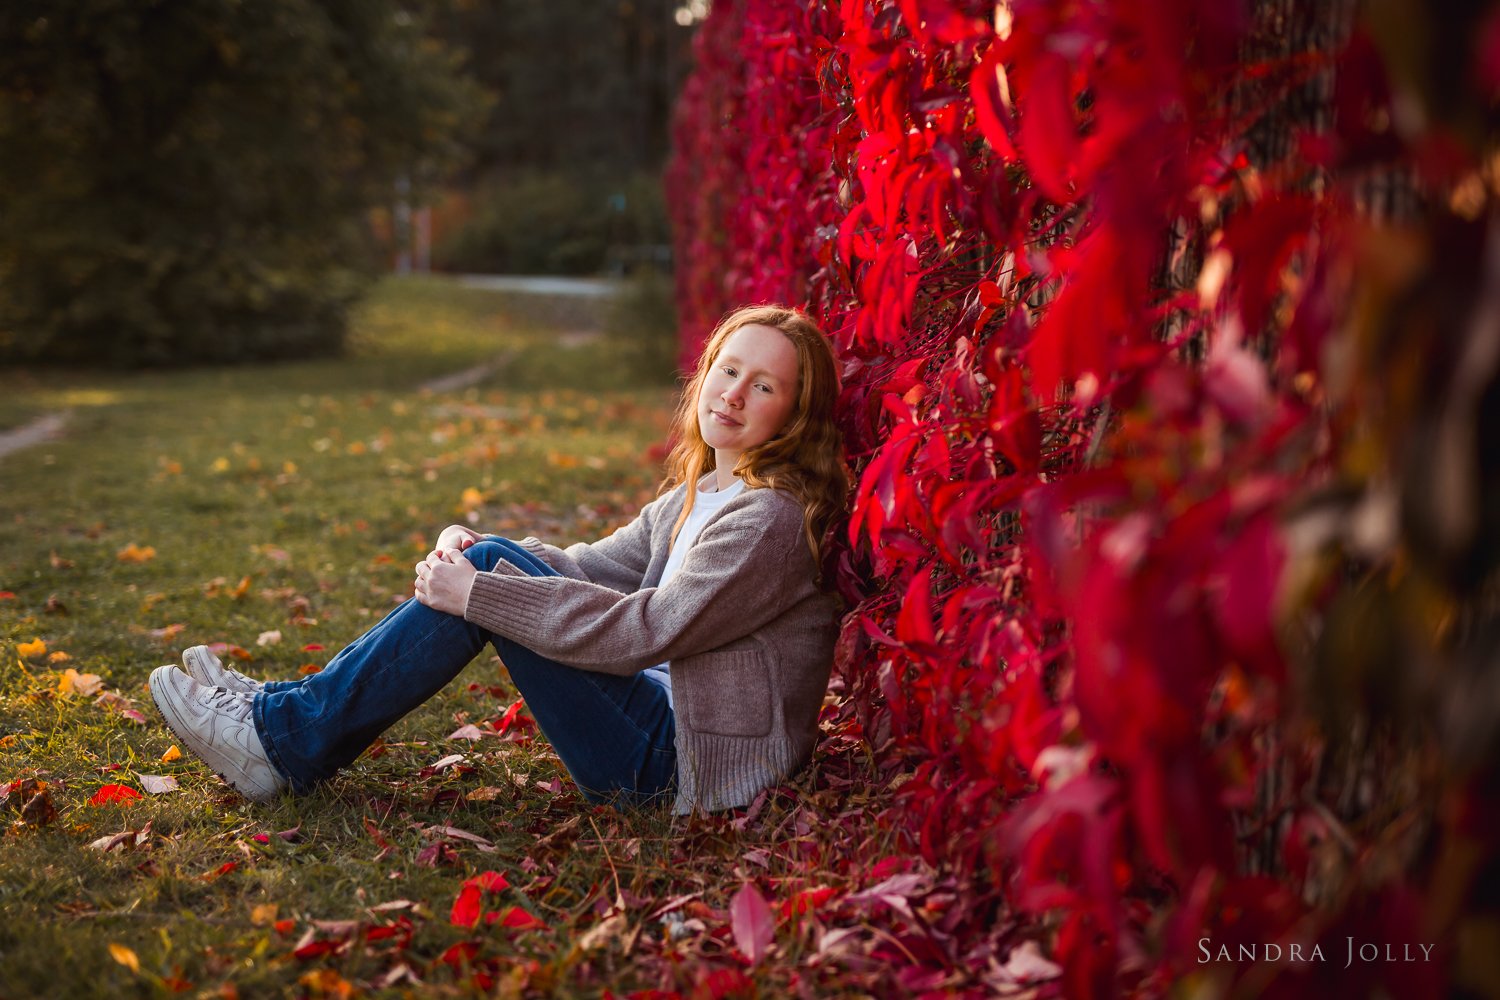 red-leaves-autumn-stockhlolm-portrait.jpg